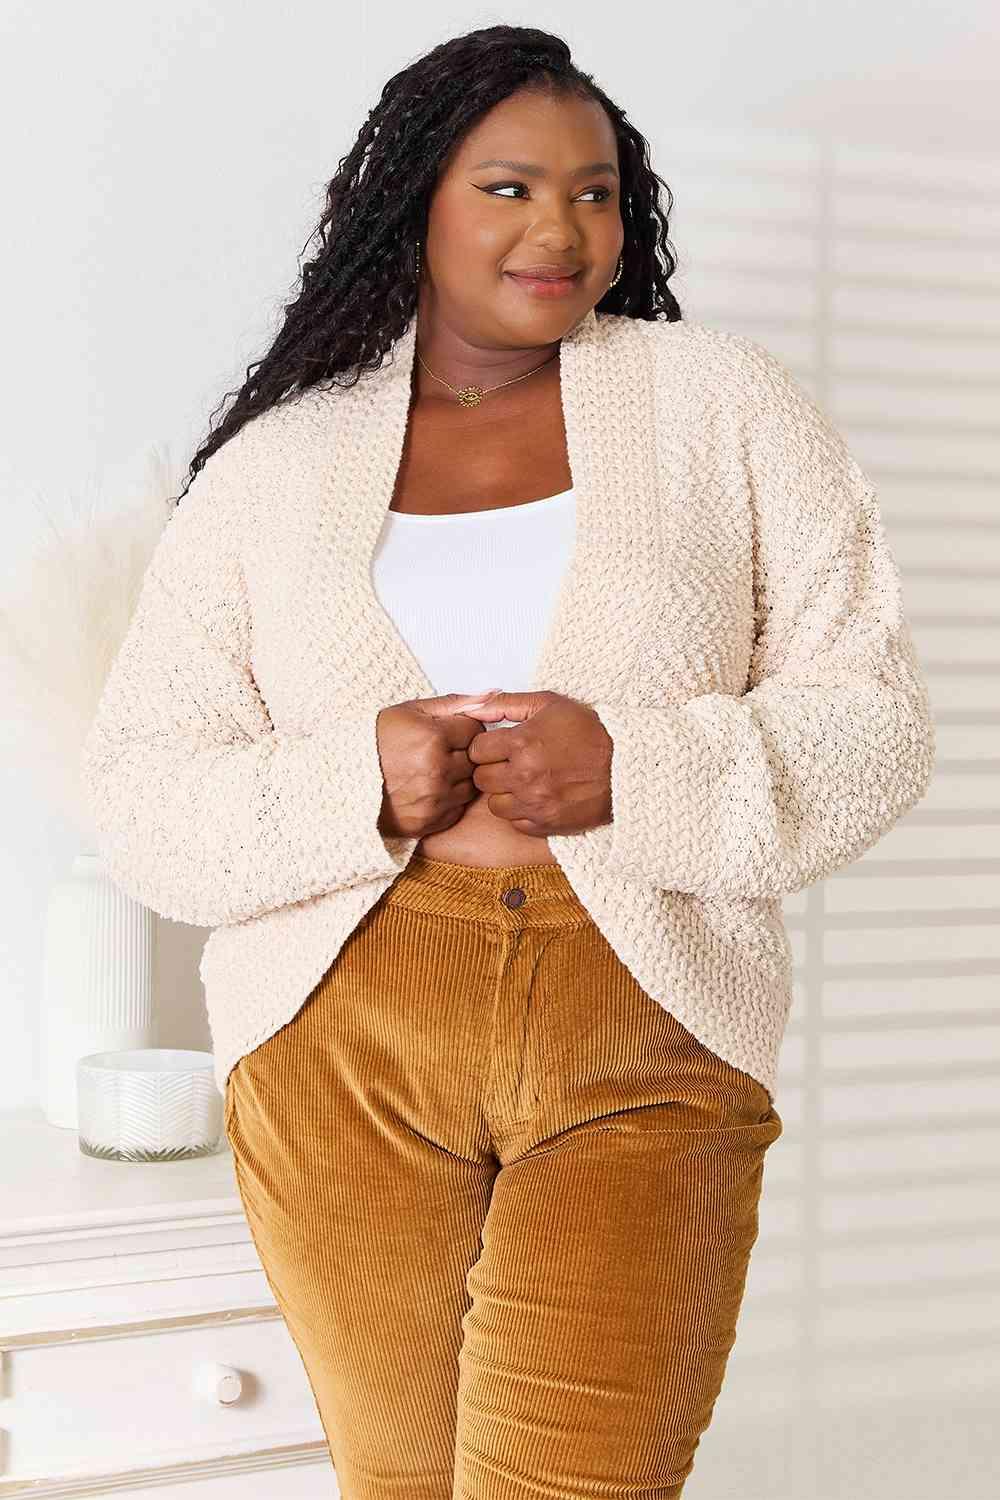 Women's Sweaters - Cardigans Double Take Open Front Long Sleeve Cardigan